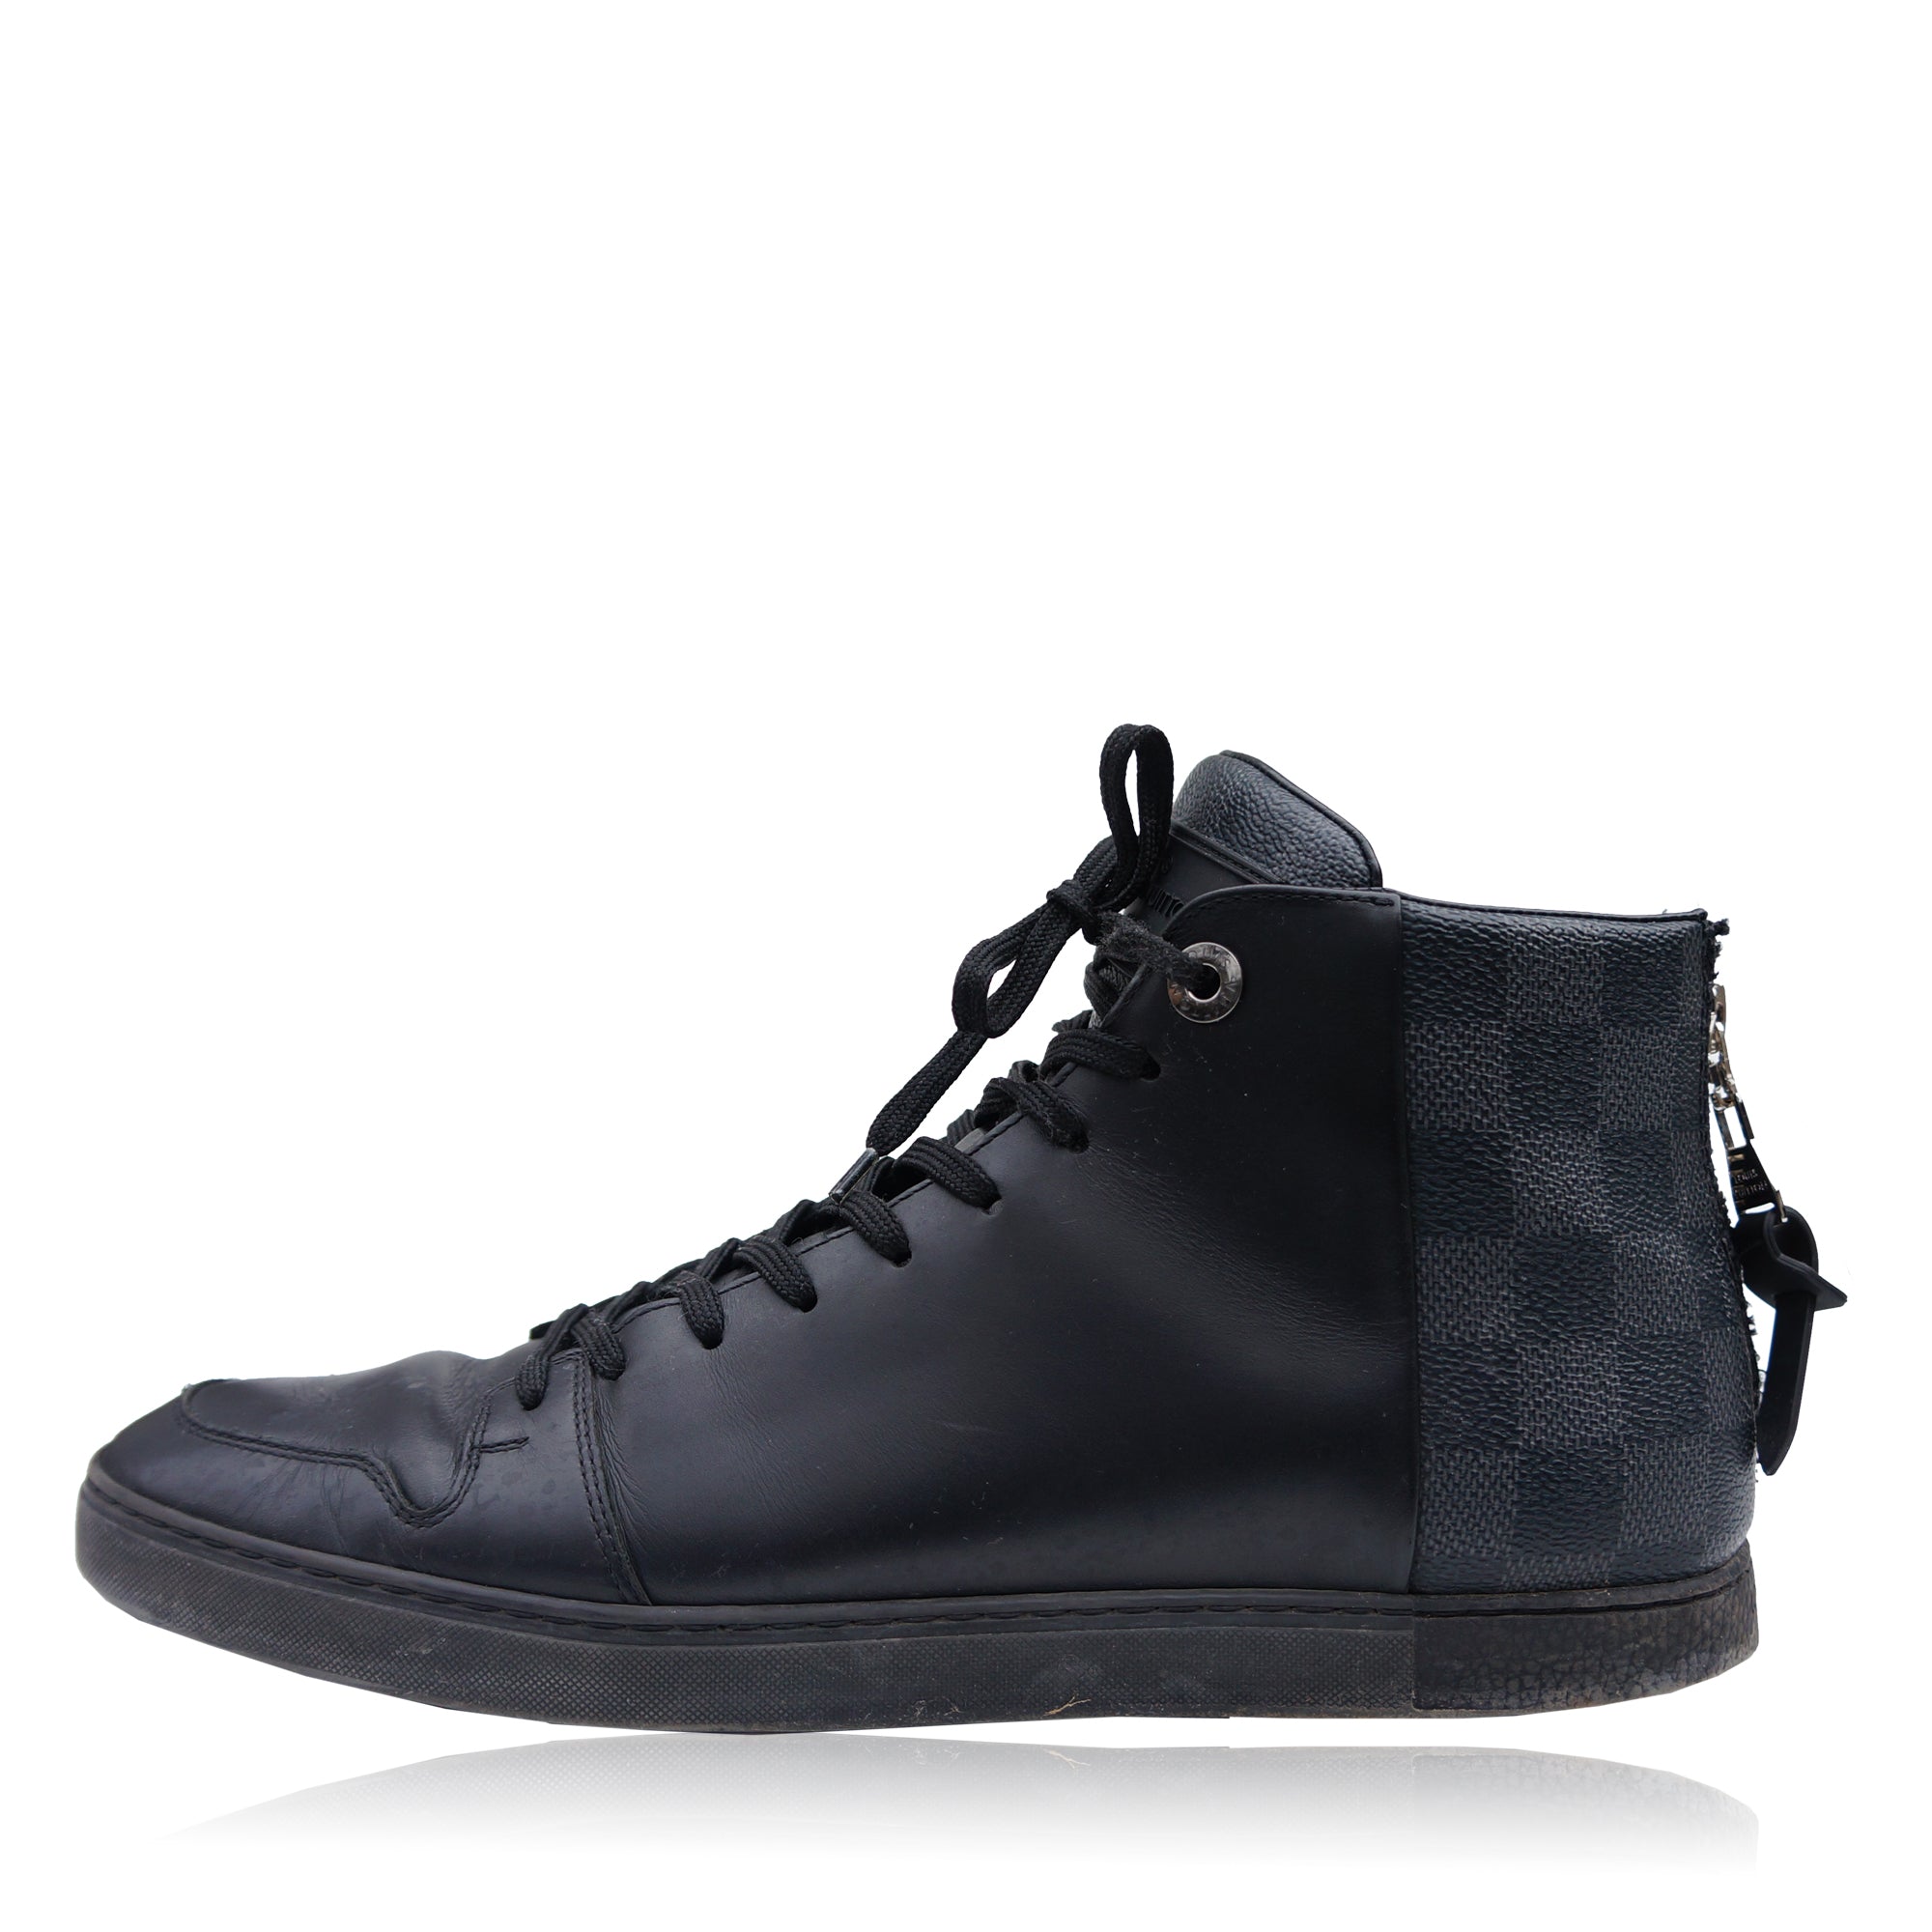 Louis Vuitton, Shoes, Louis Vuitton High Top Sneaker